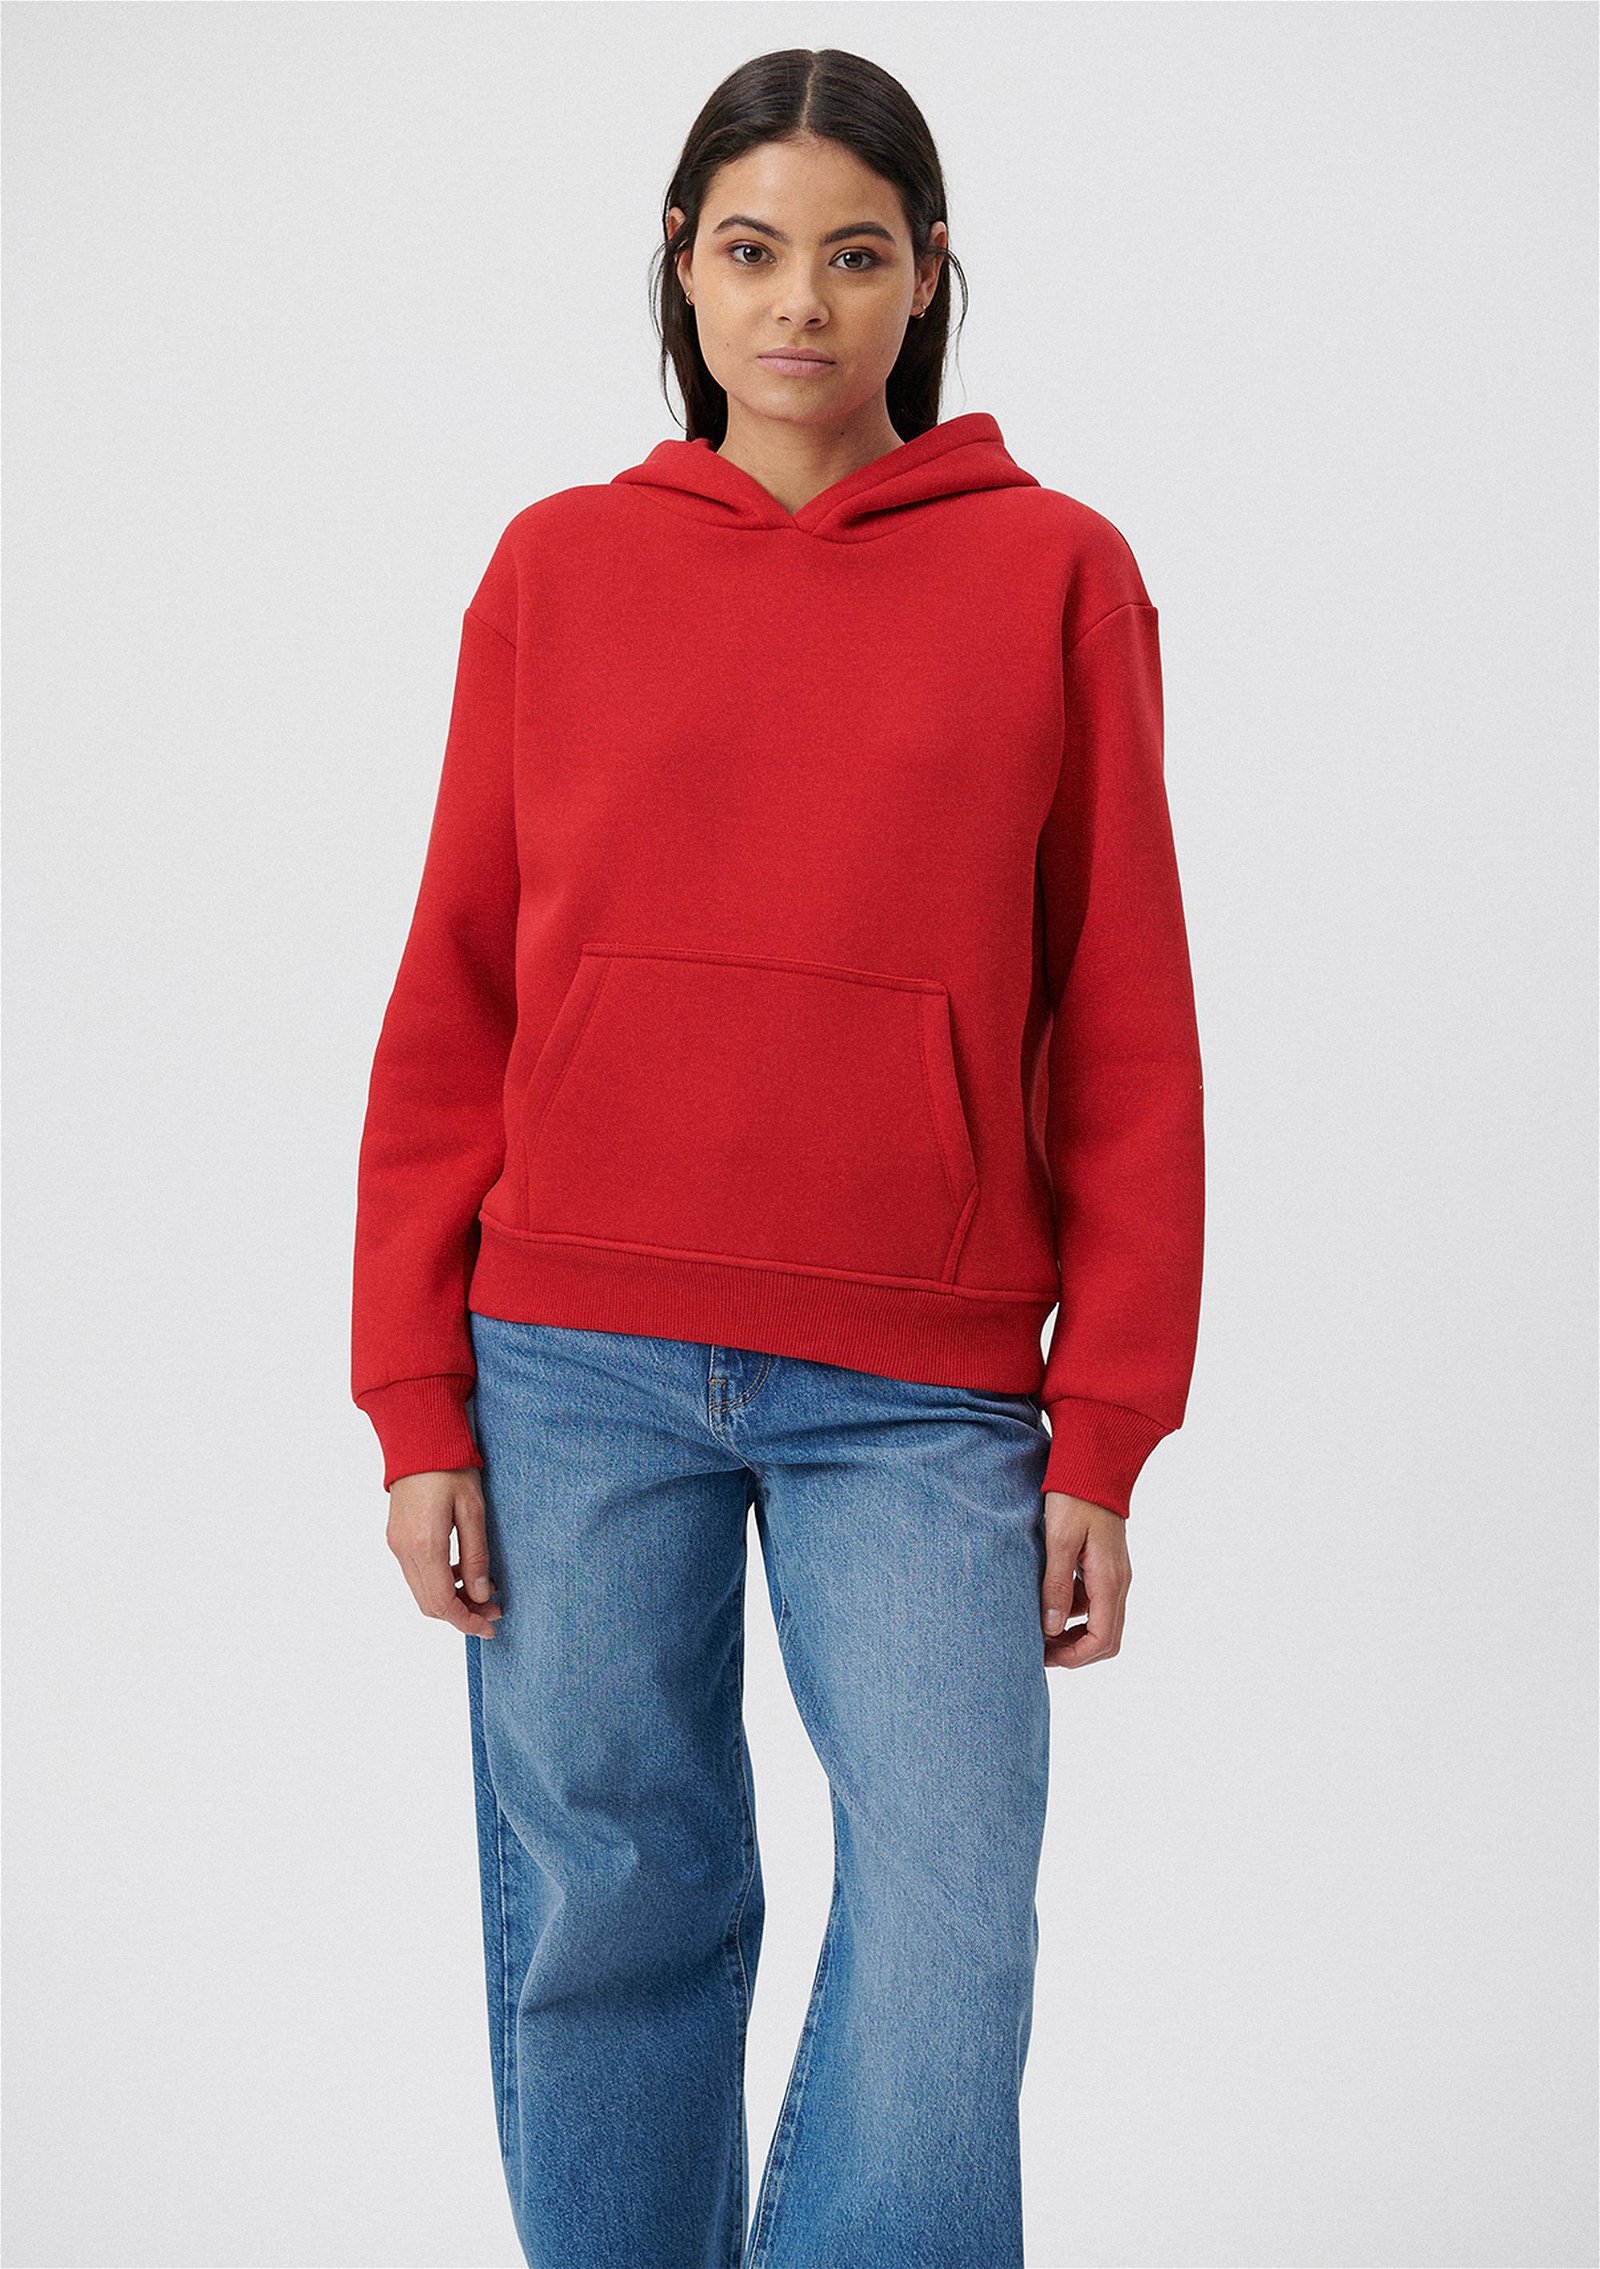 Mavi Kapüşonlu Kırmızı Basic Sweatshirt 167299-82054